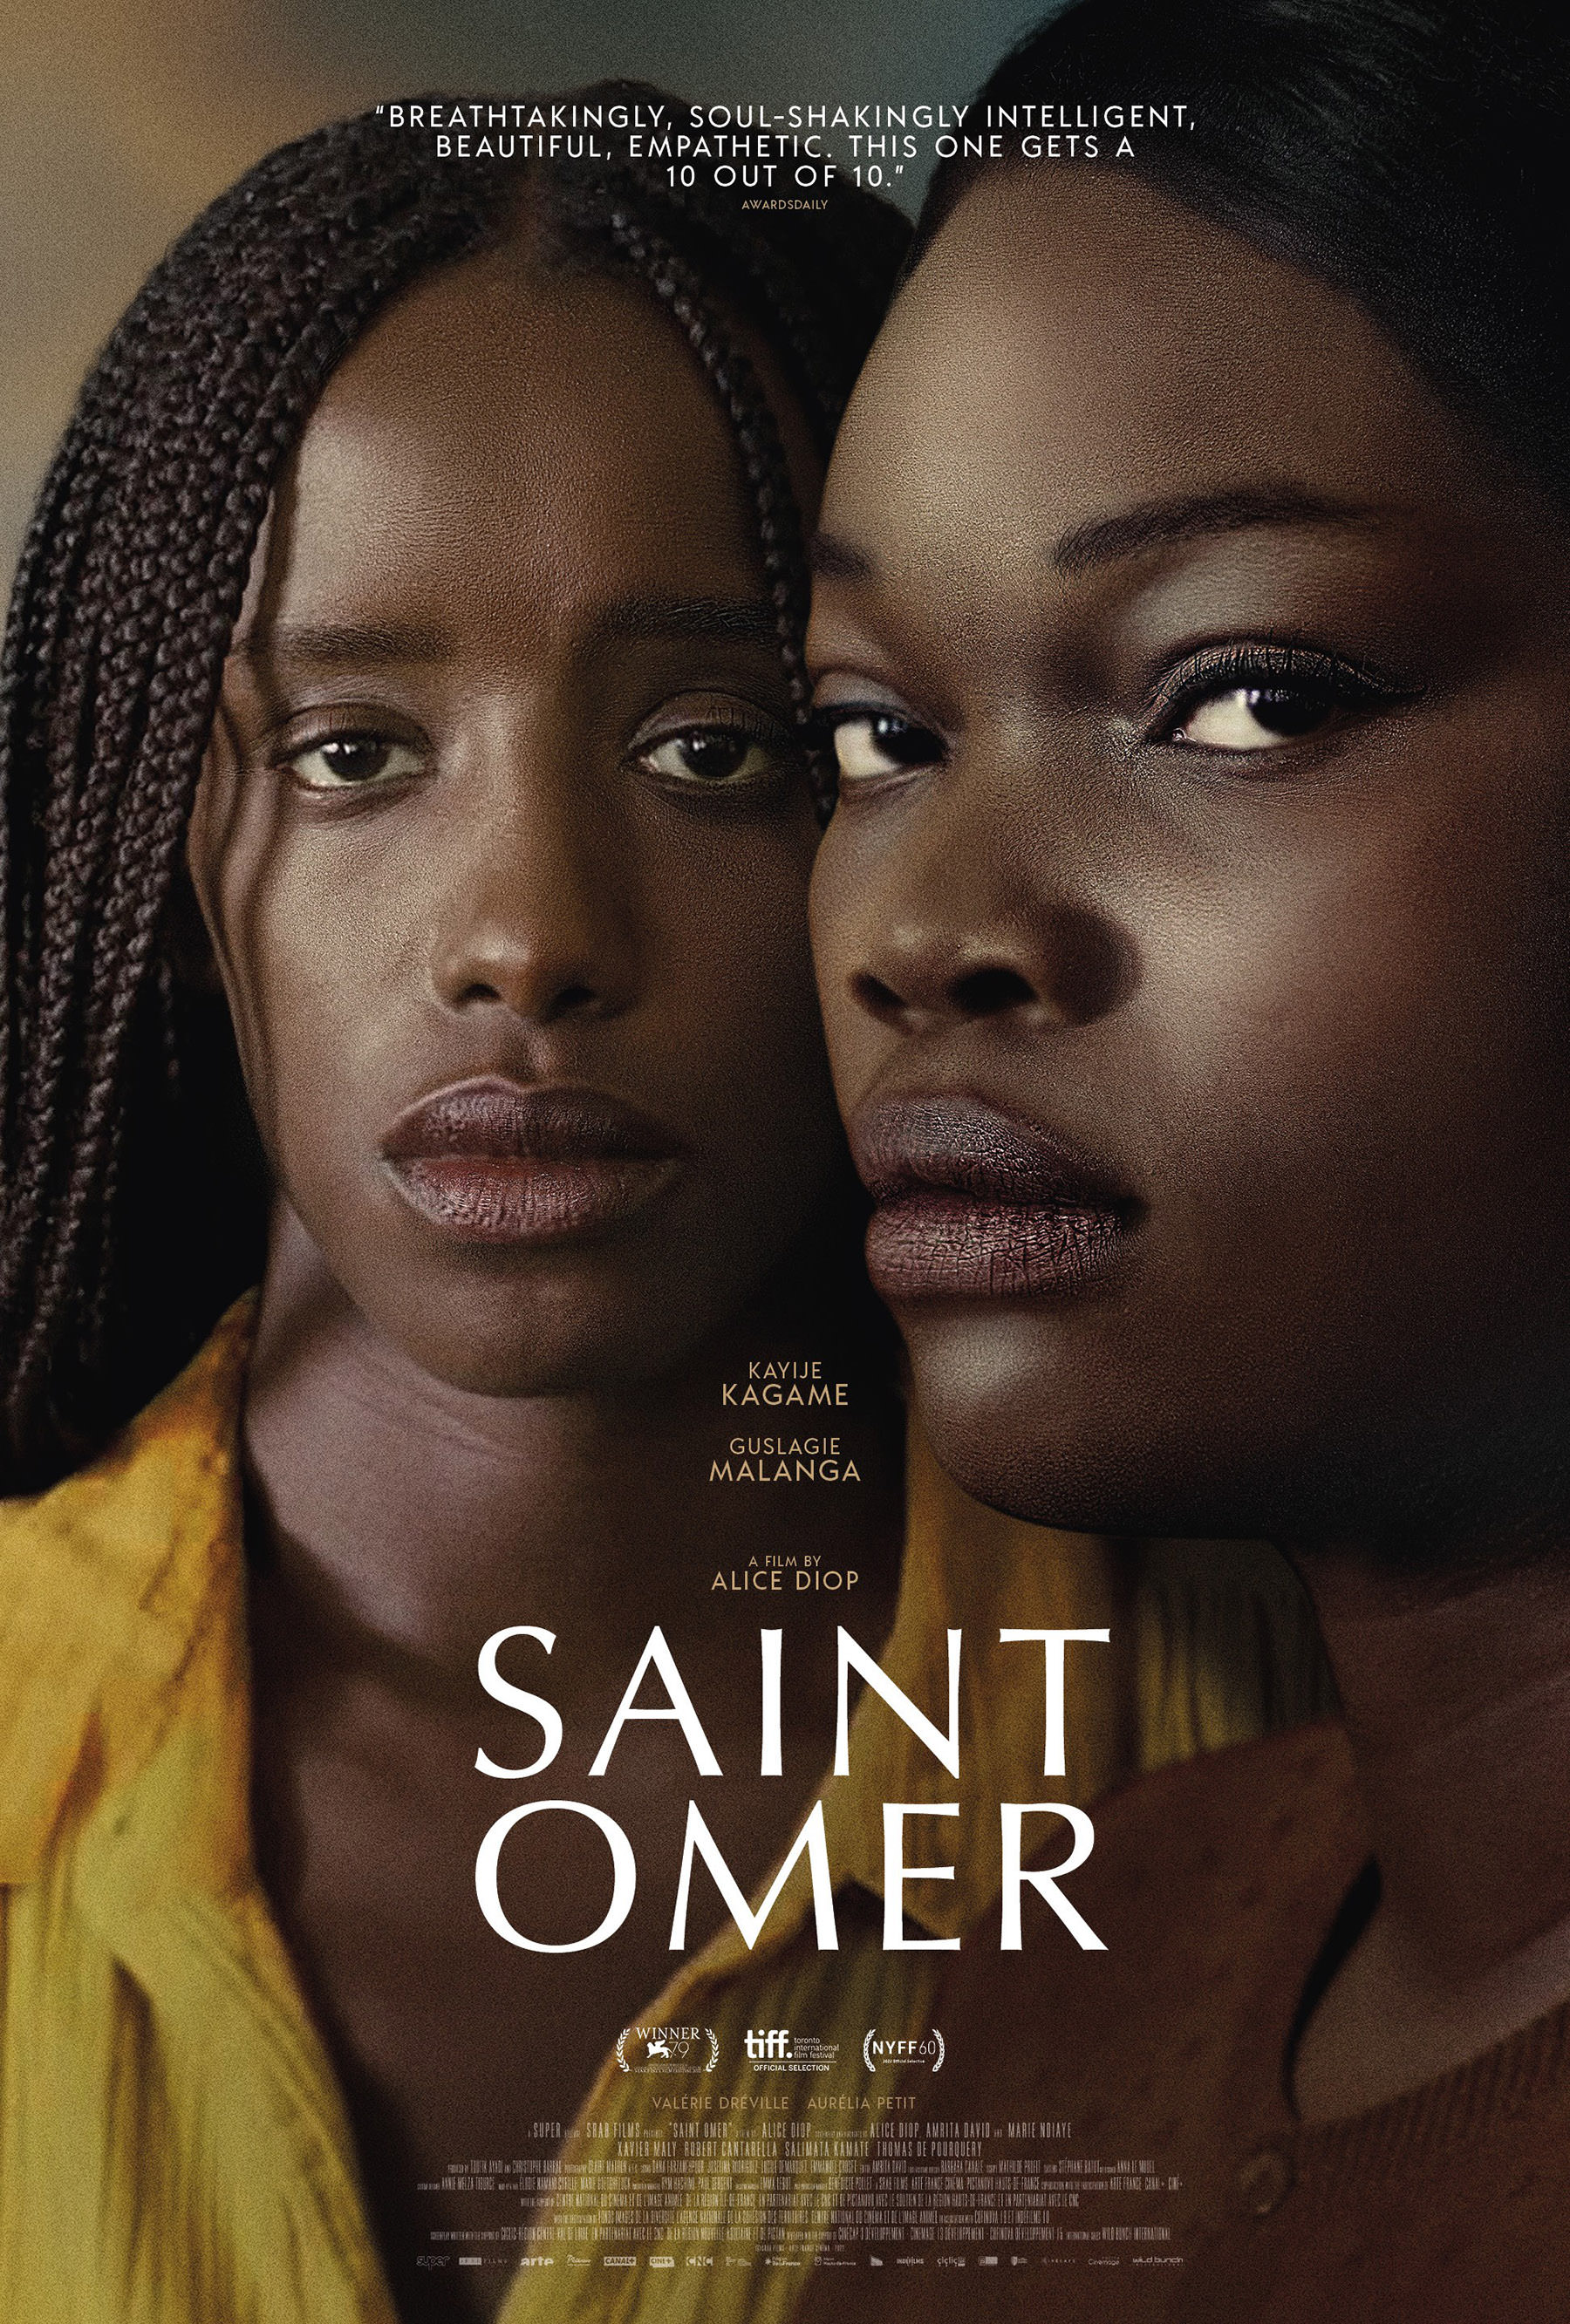 Promotion image for Saint Omer